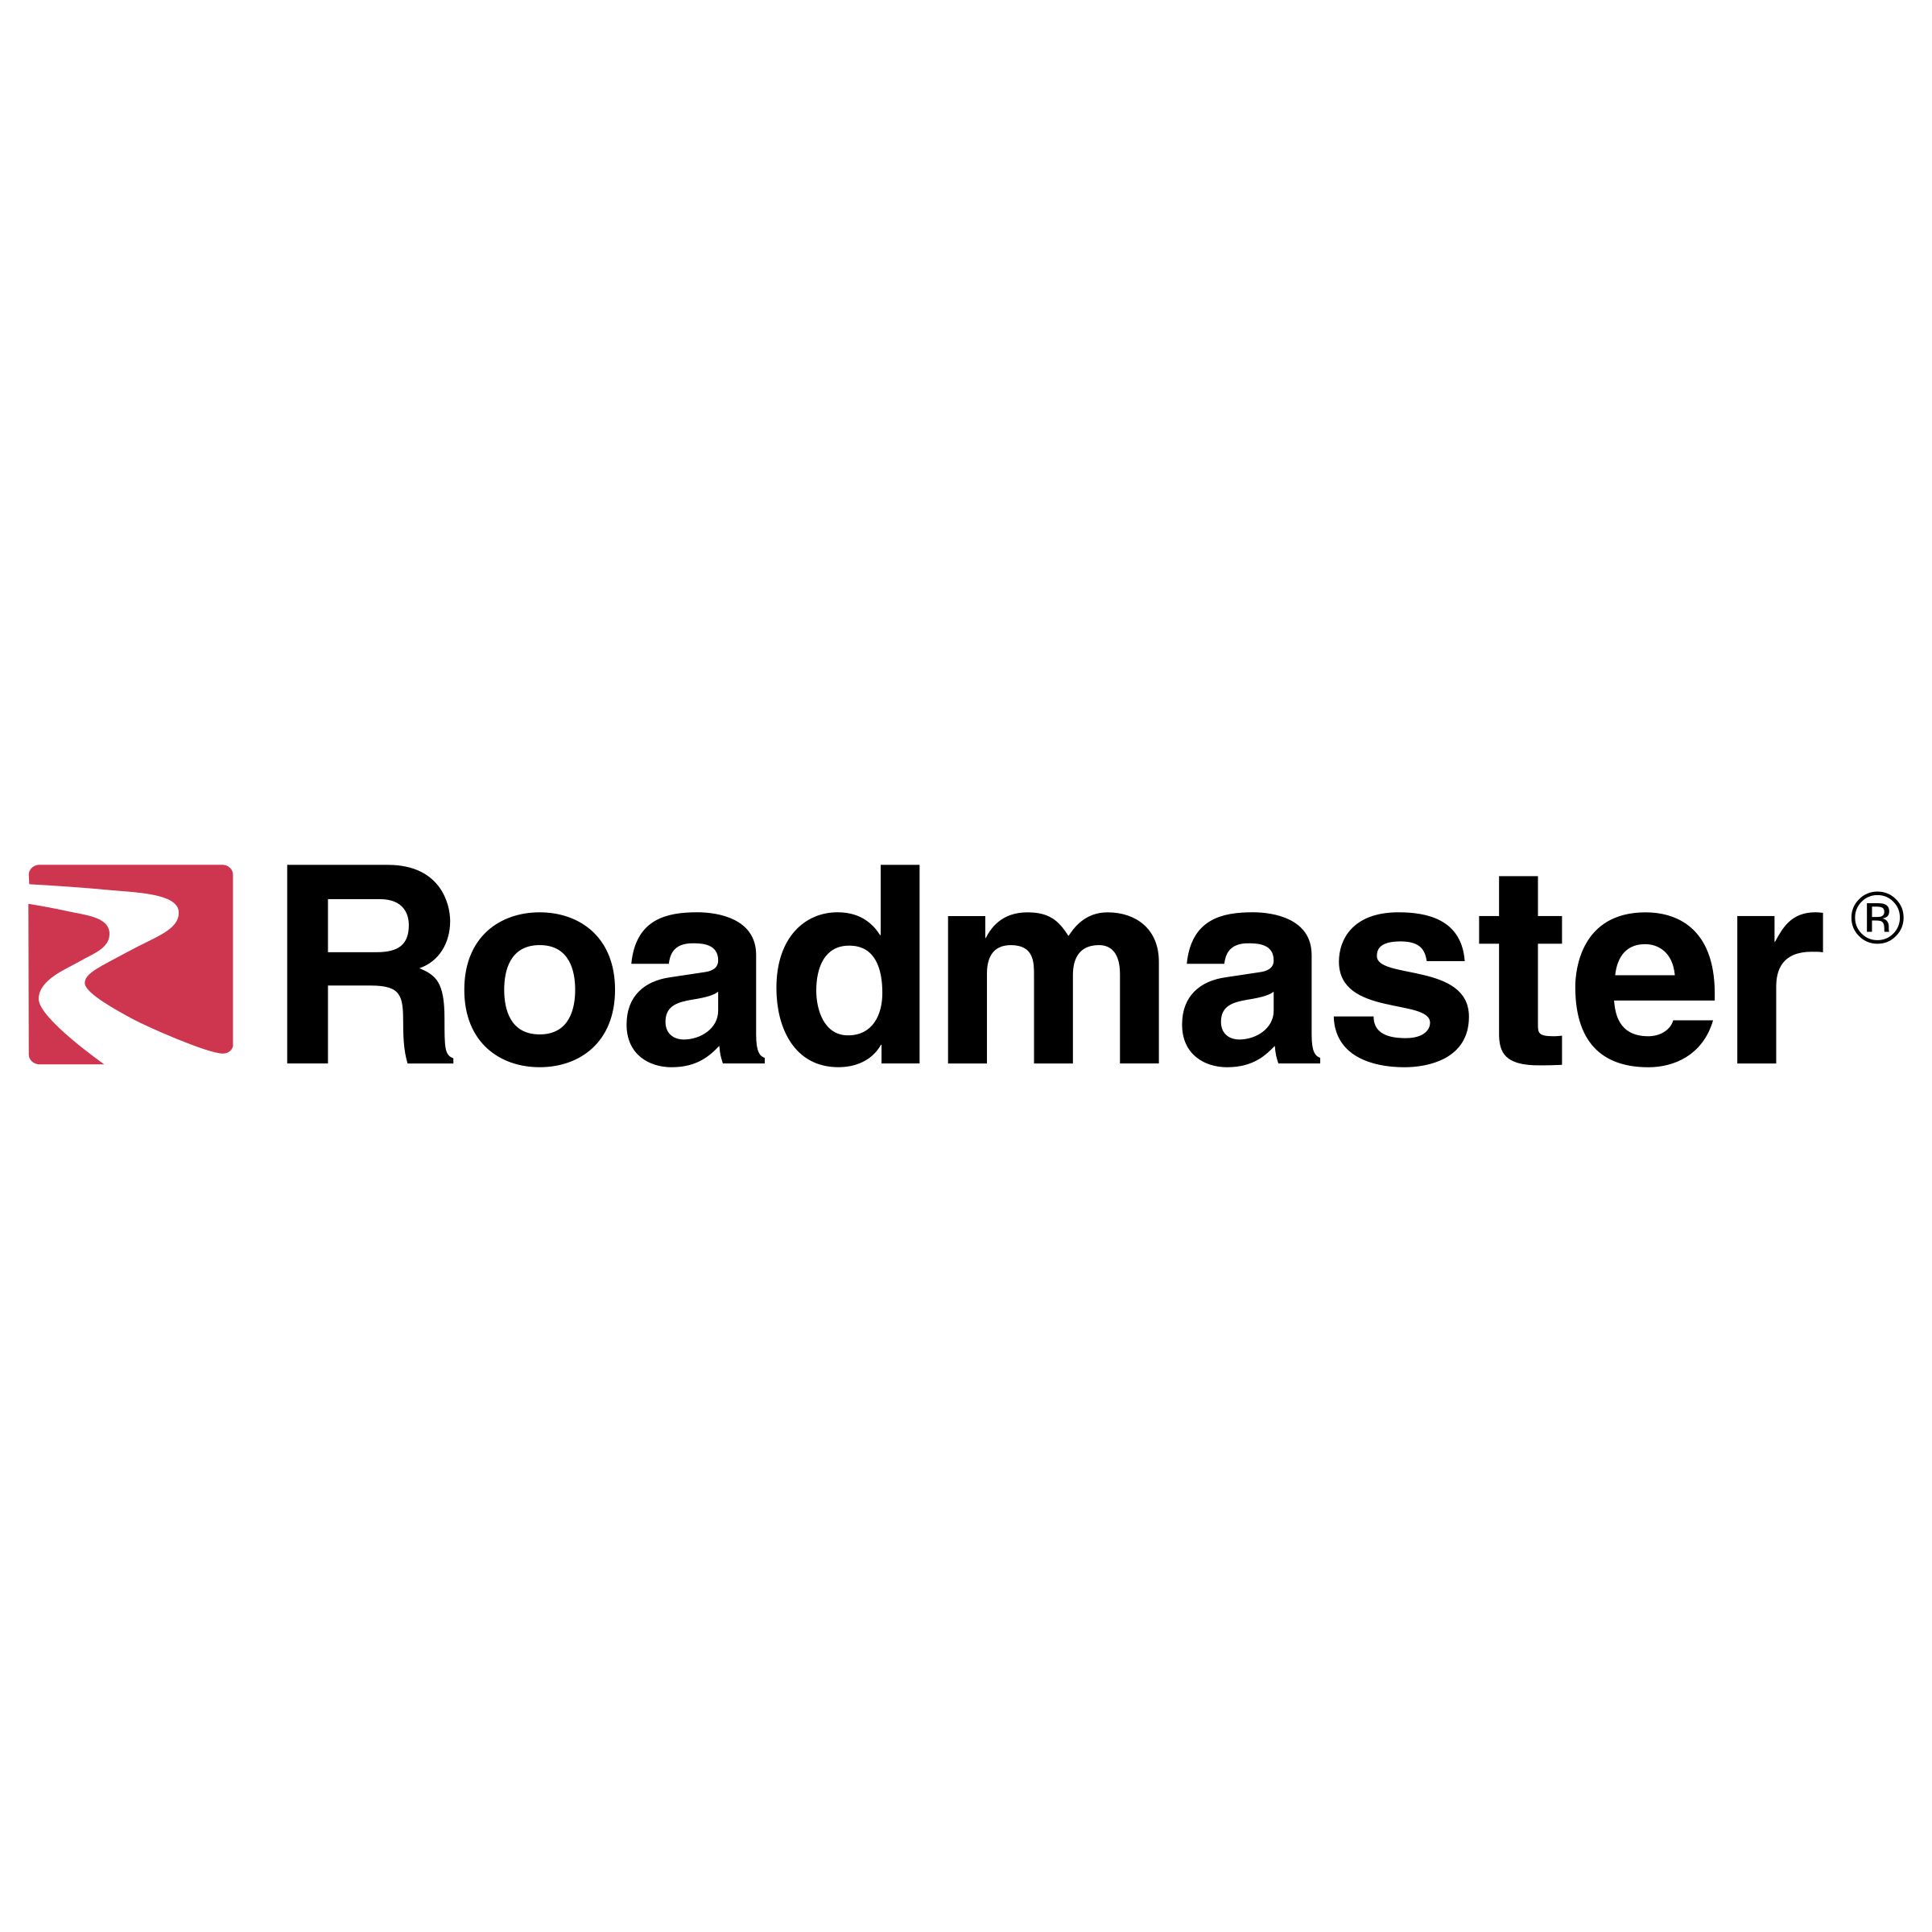 Roadmaster Logo - Roadmaster Logo PNG Transparent & SVG Vector - Freebie Supply